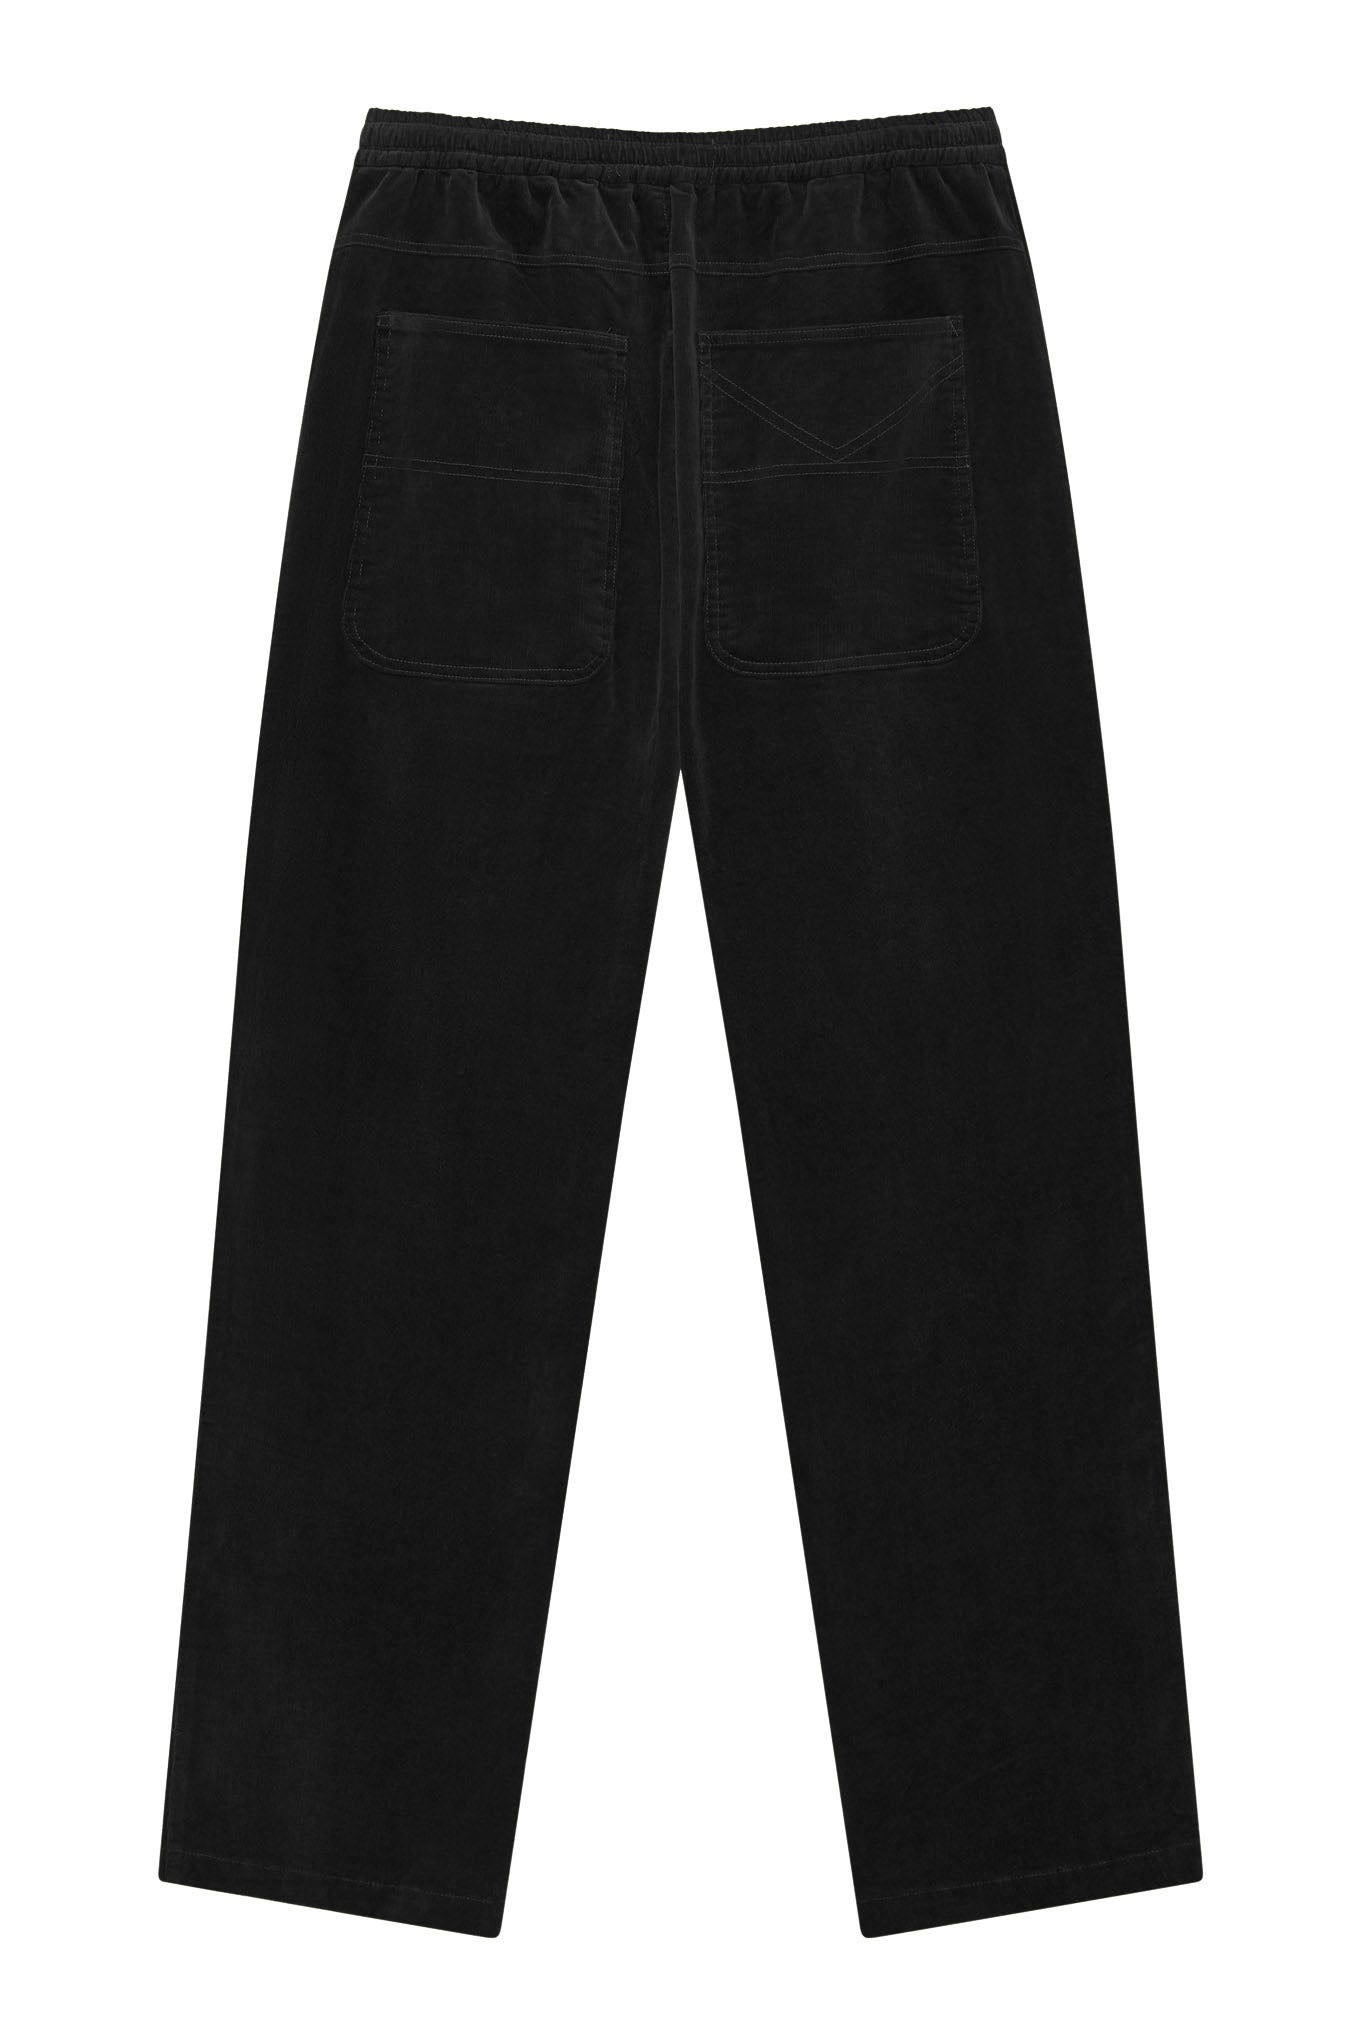 ANDRO - Organic Cotton Cord Trouser Black